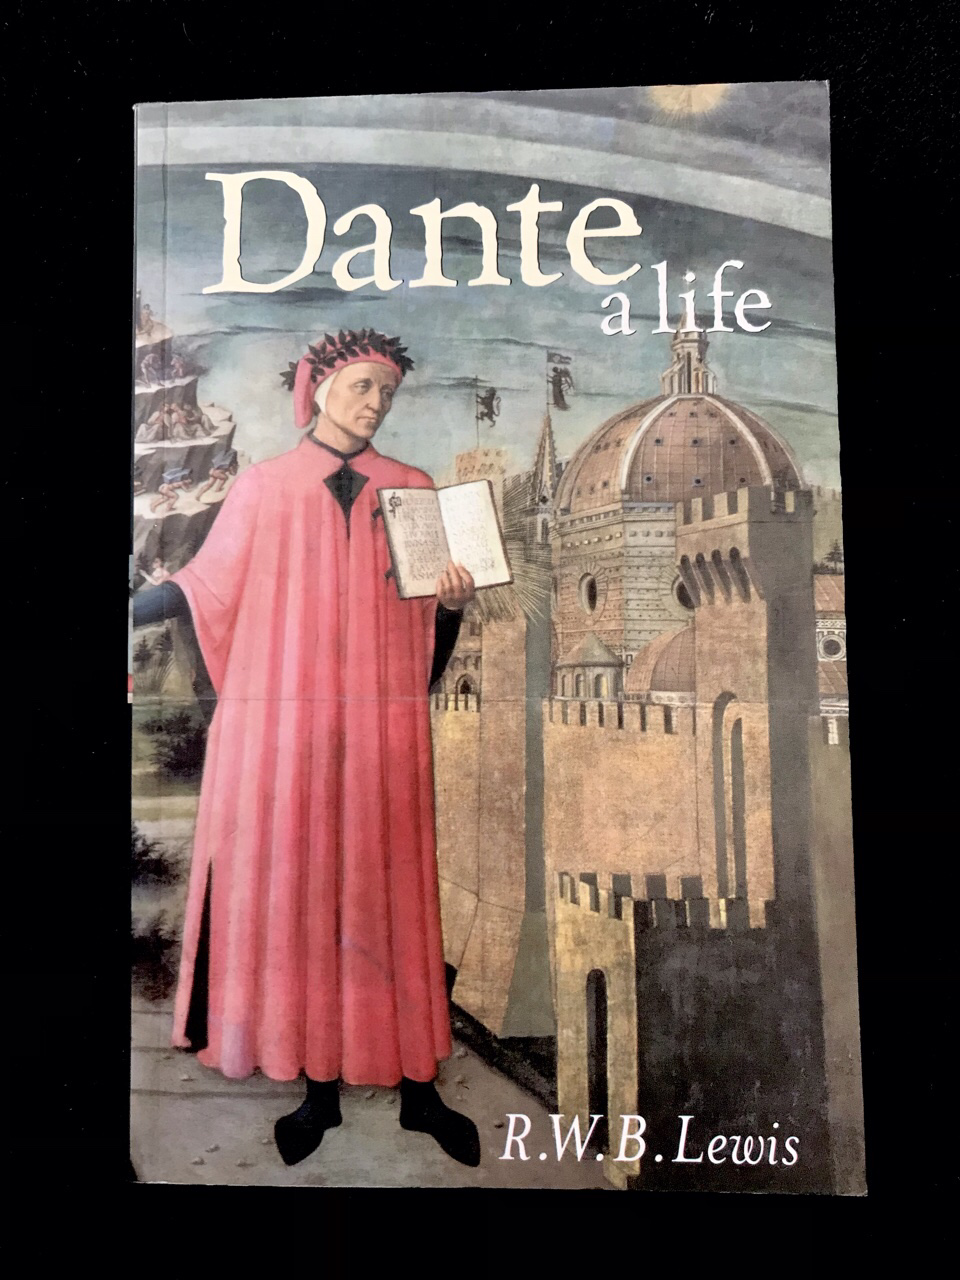 Dante: A Life by R. W. B. Lewis